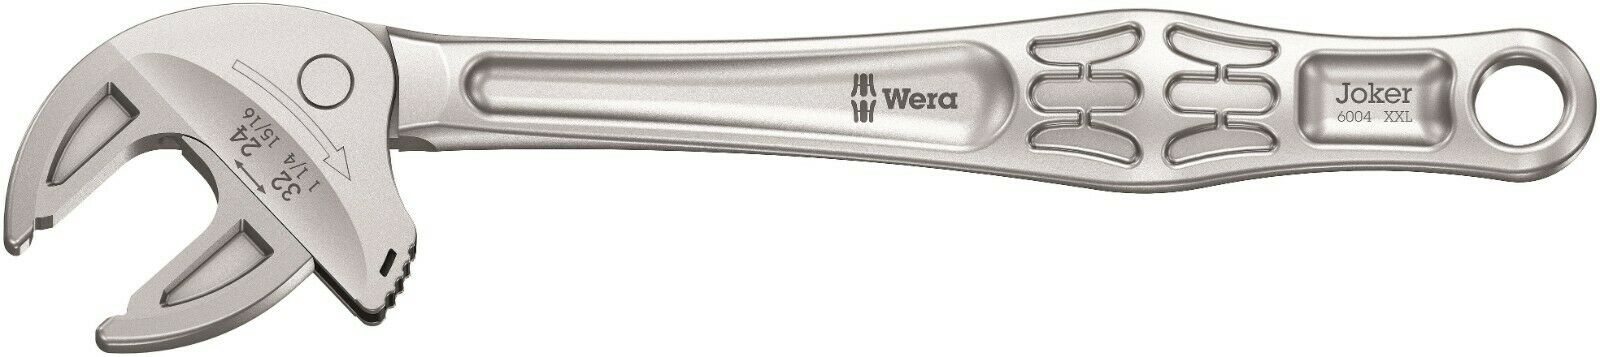 New Wera Joker 6004 Self-Adjusting Ratcheting Adjustable Wrenches